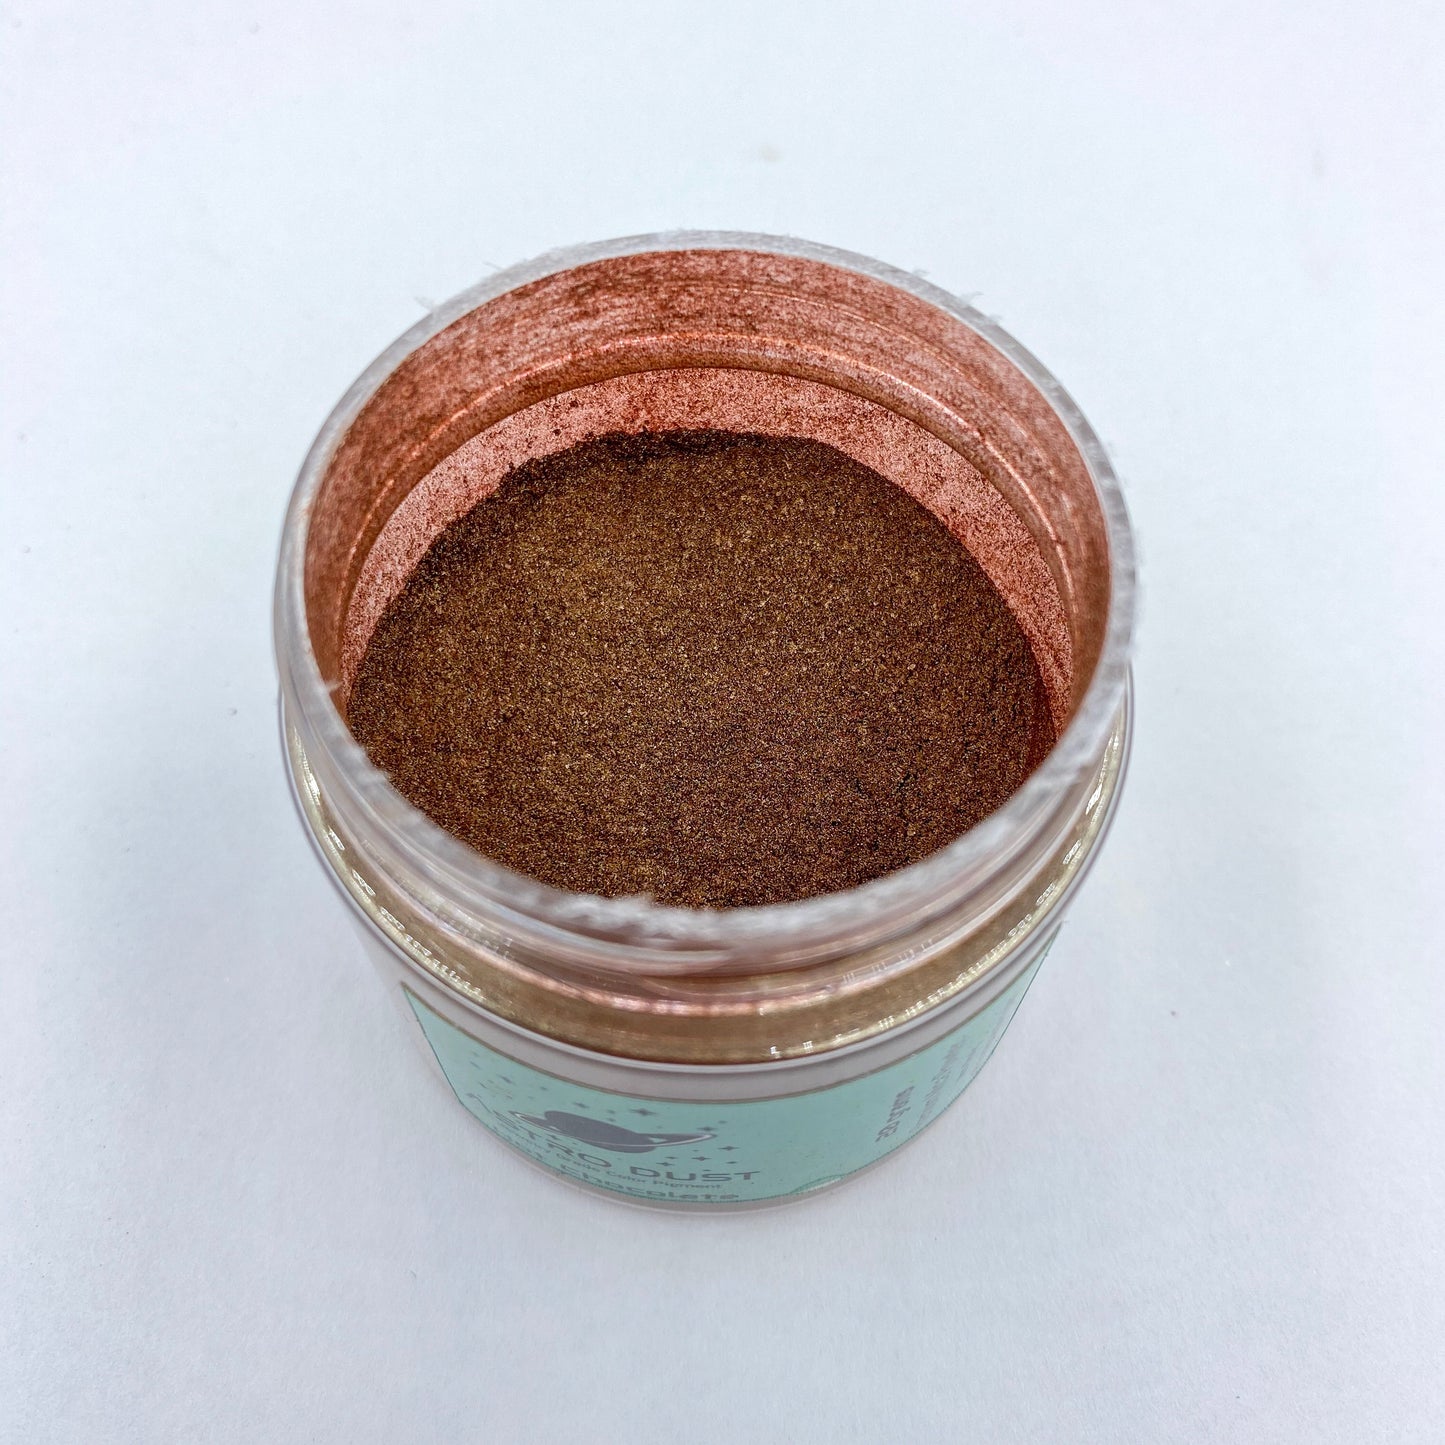 Astro Dust Hot Chocolate Color Pigment - Patrick Adair Supplies